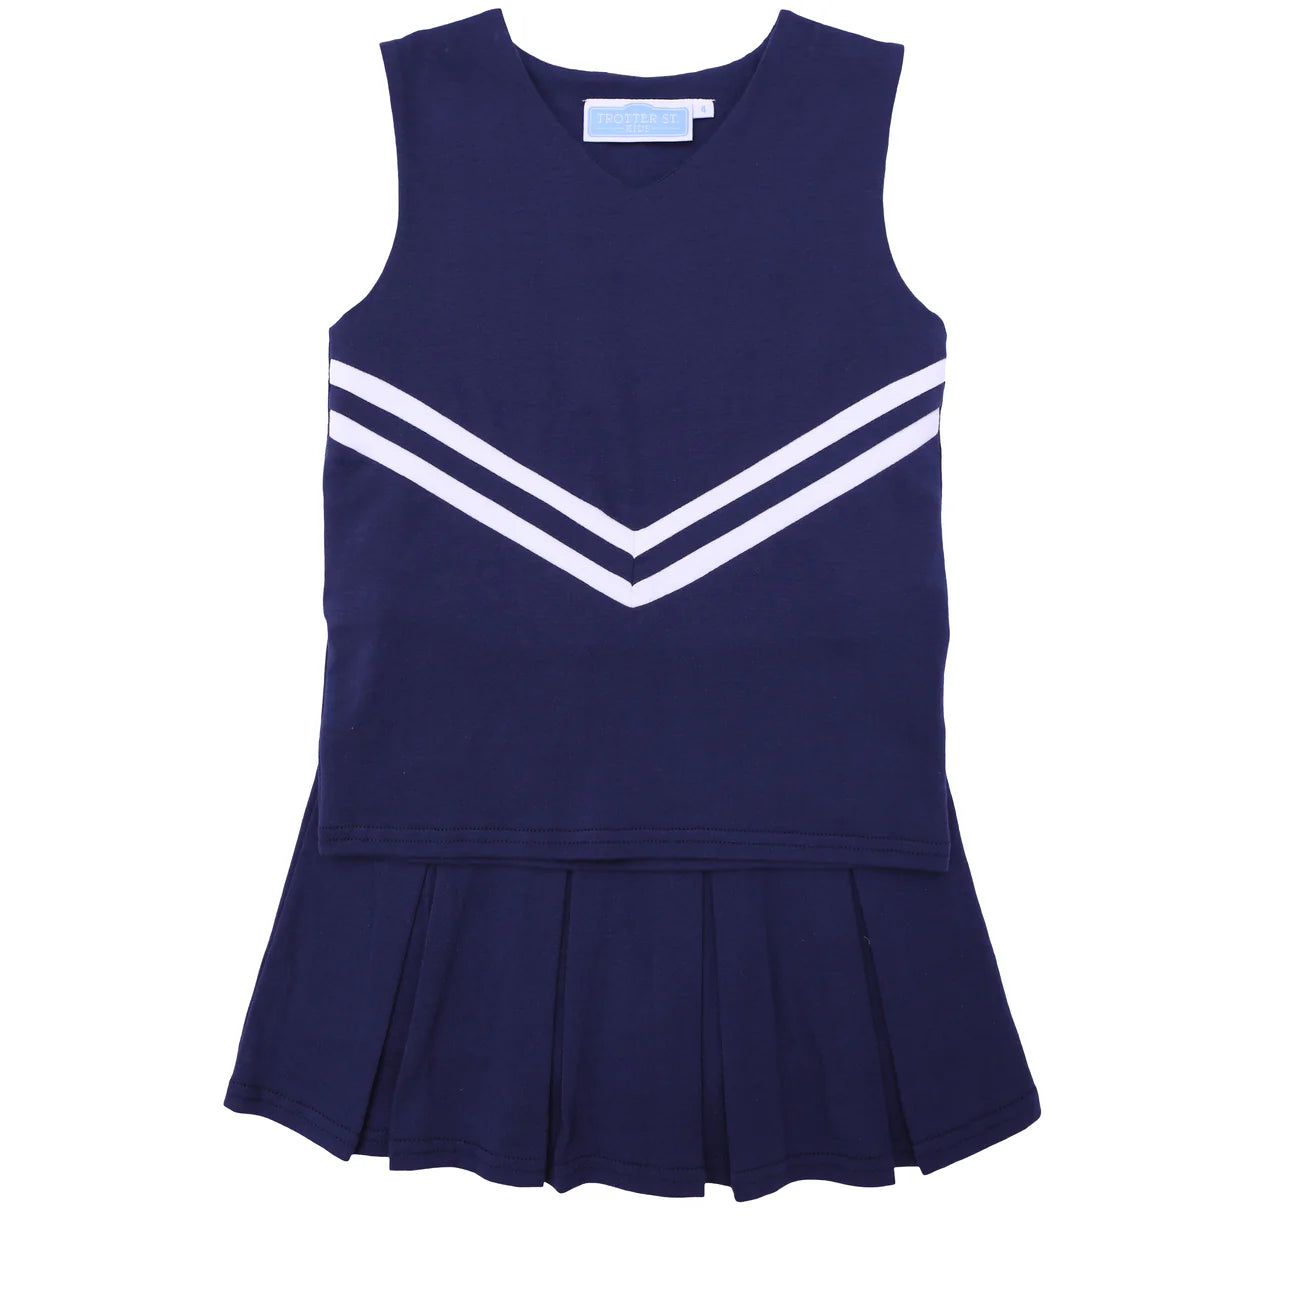 Trotter Street Kids - Cheer Uniform - Navy